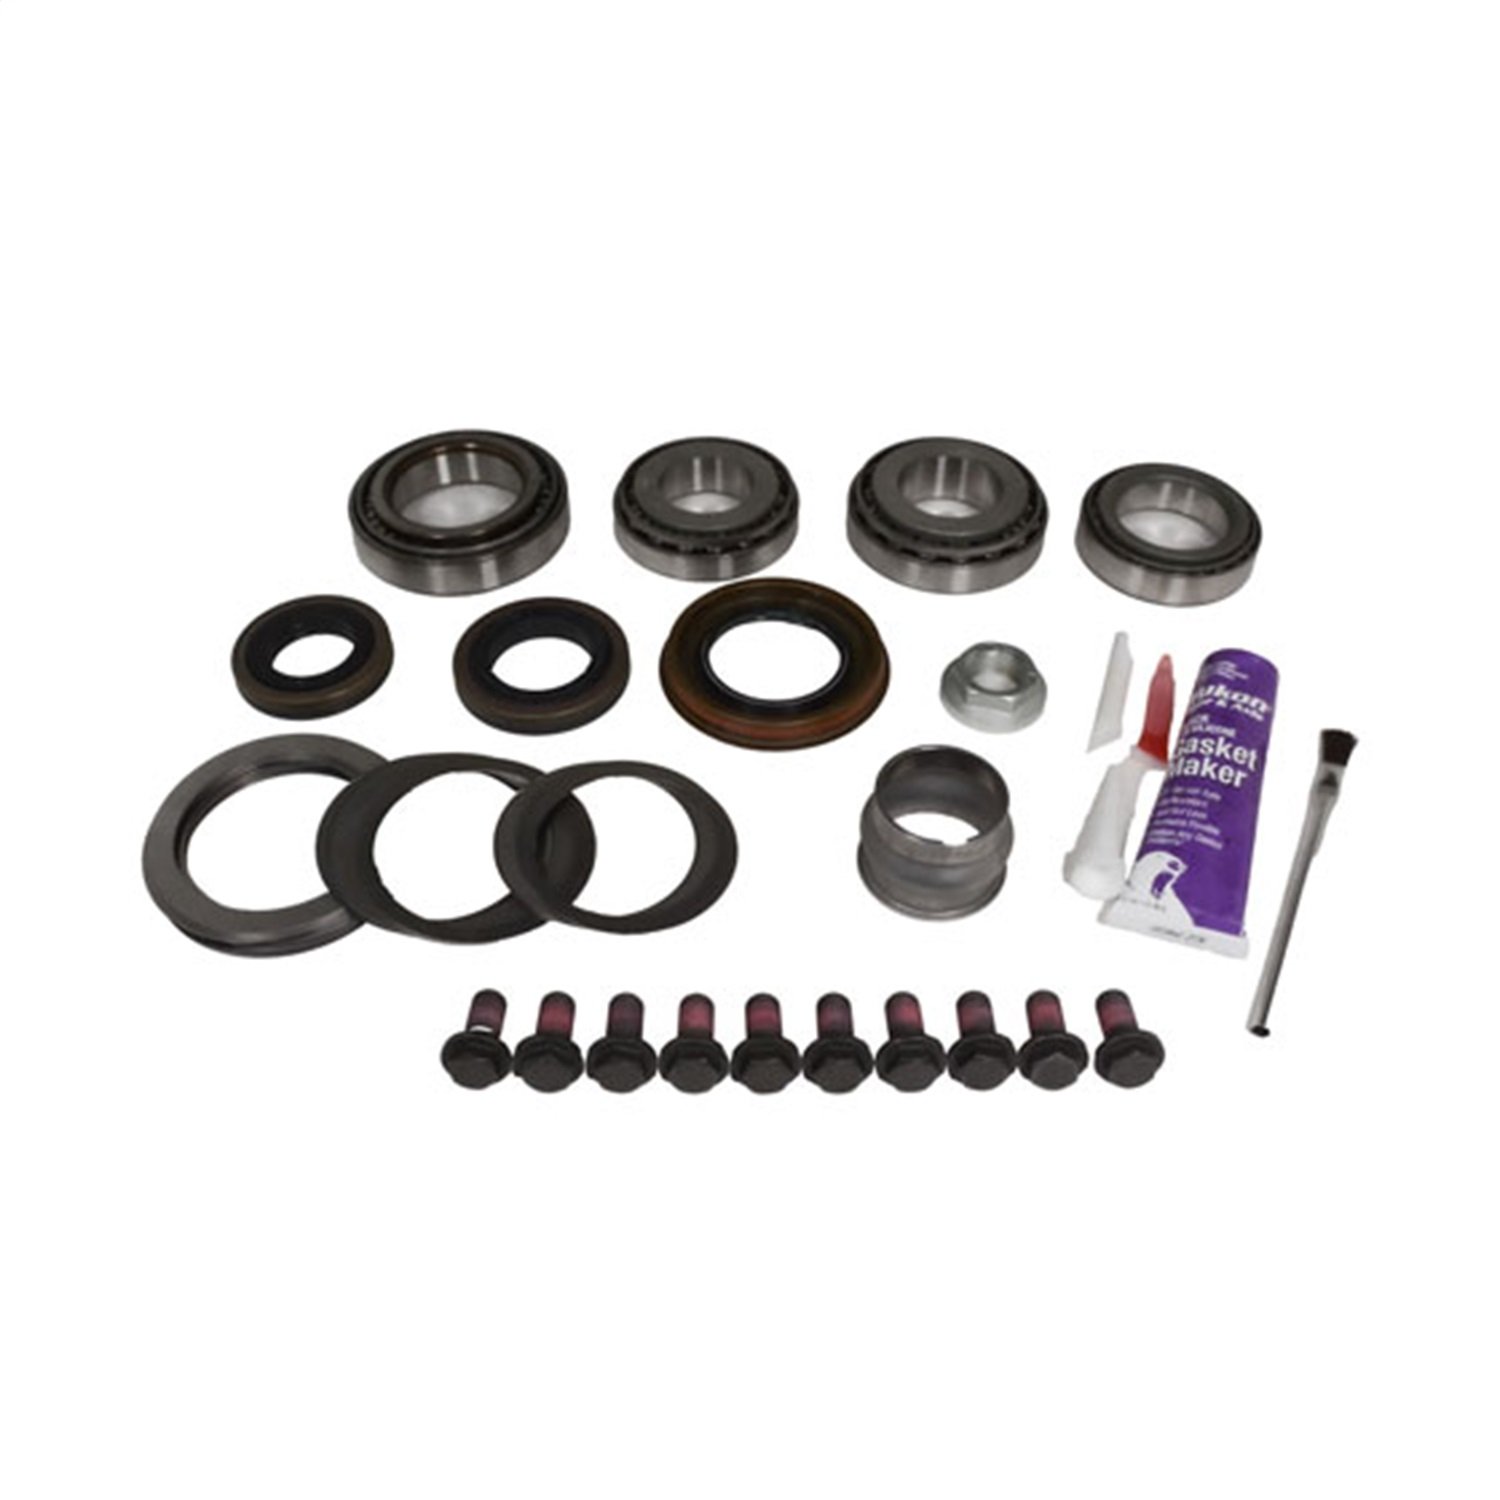 USA Standard 11331 Gear Master Overhaul Kit, For